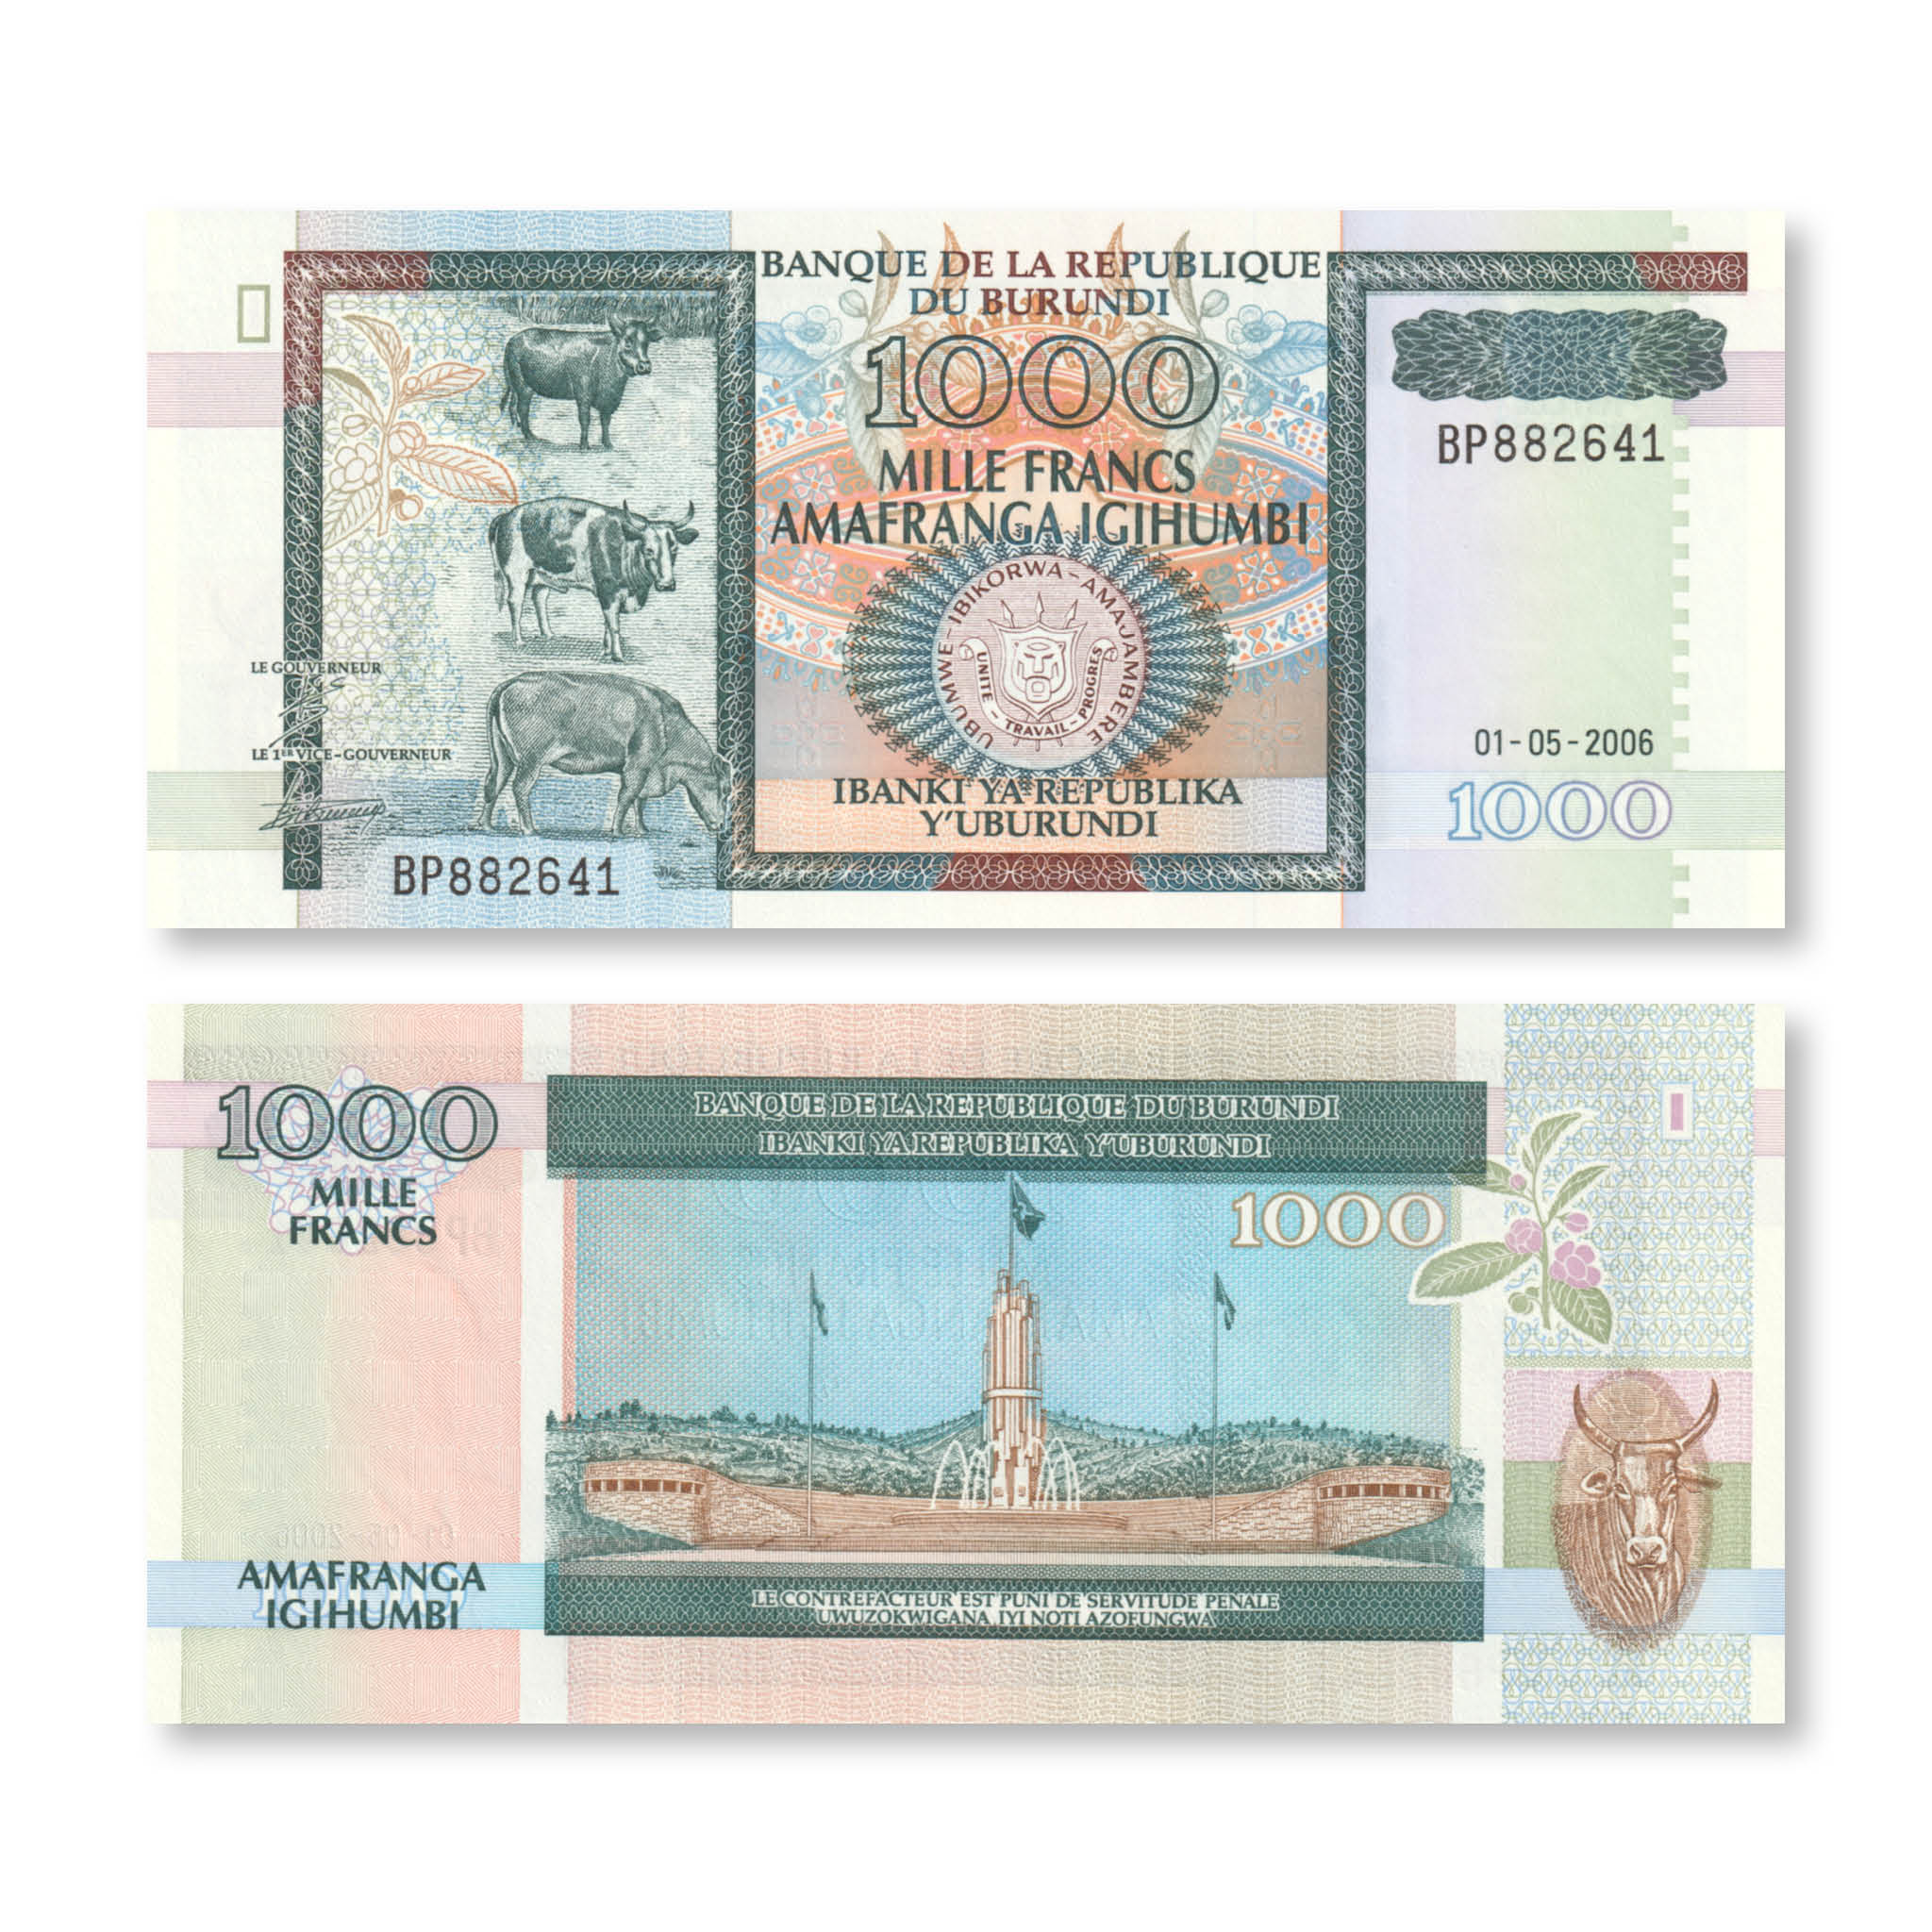 Burundi 1000 Francs, 2006, B226d, P39d, UNC - Robert's World Money - World Banknotes